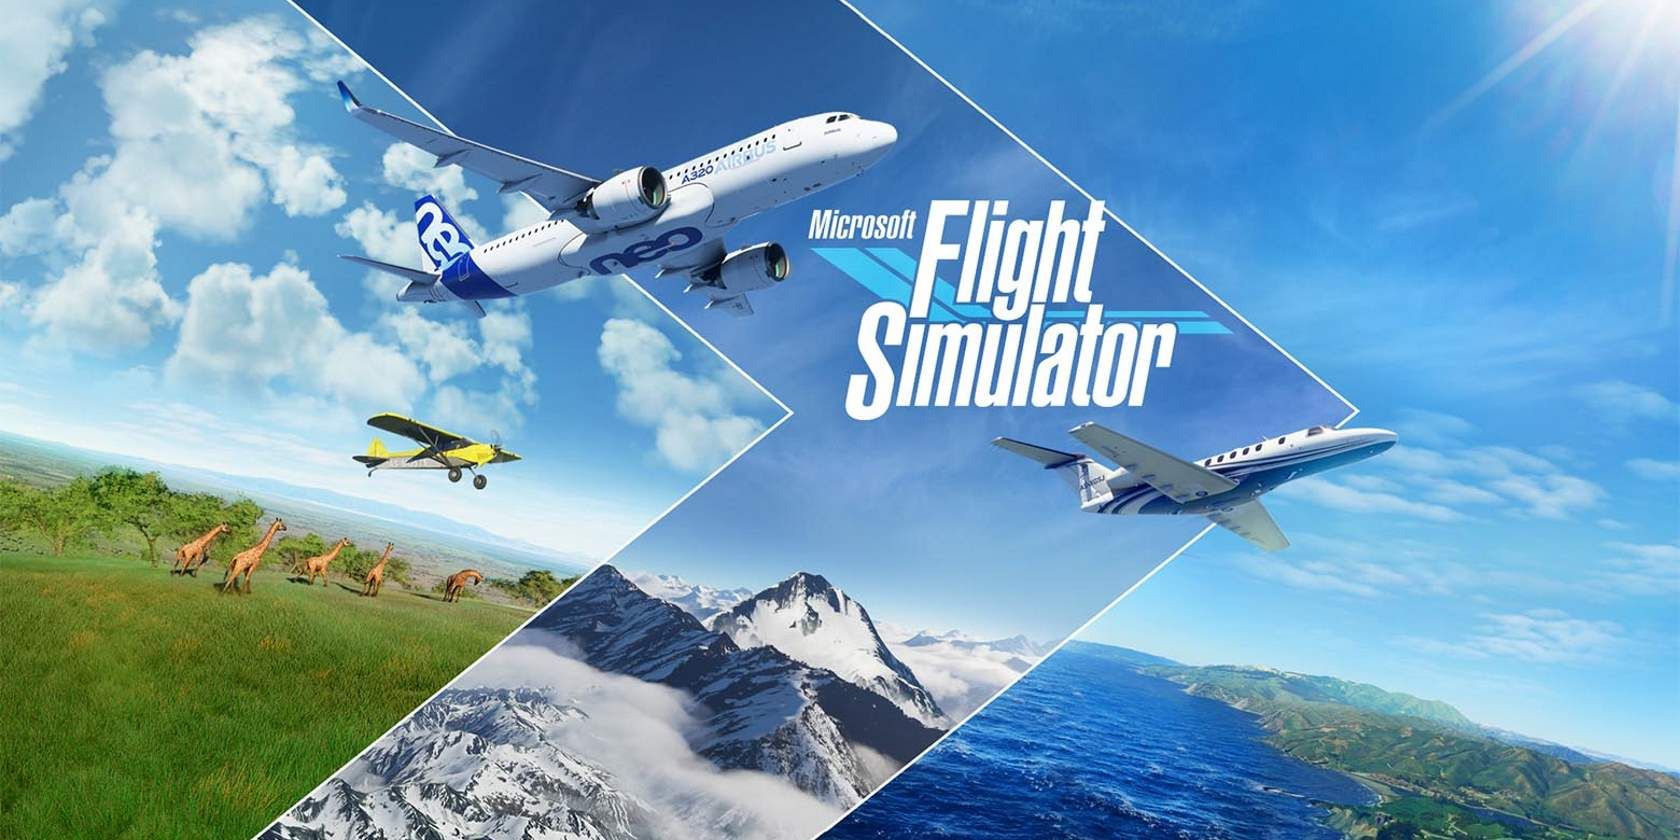 is microsoft flight simulator on game pass